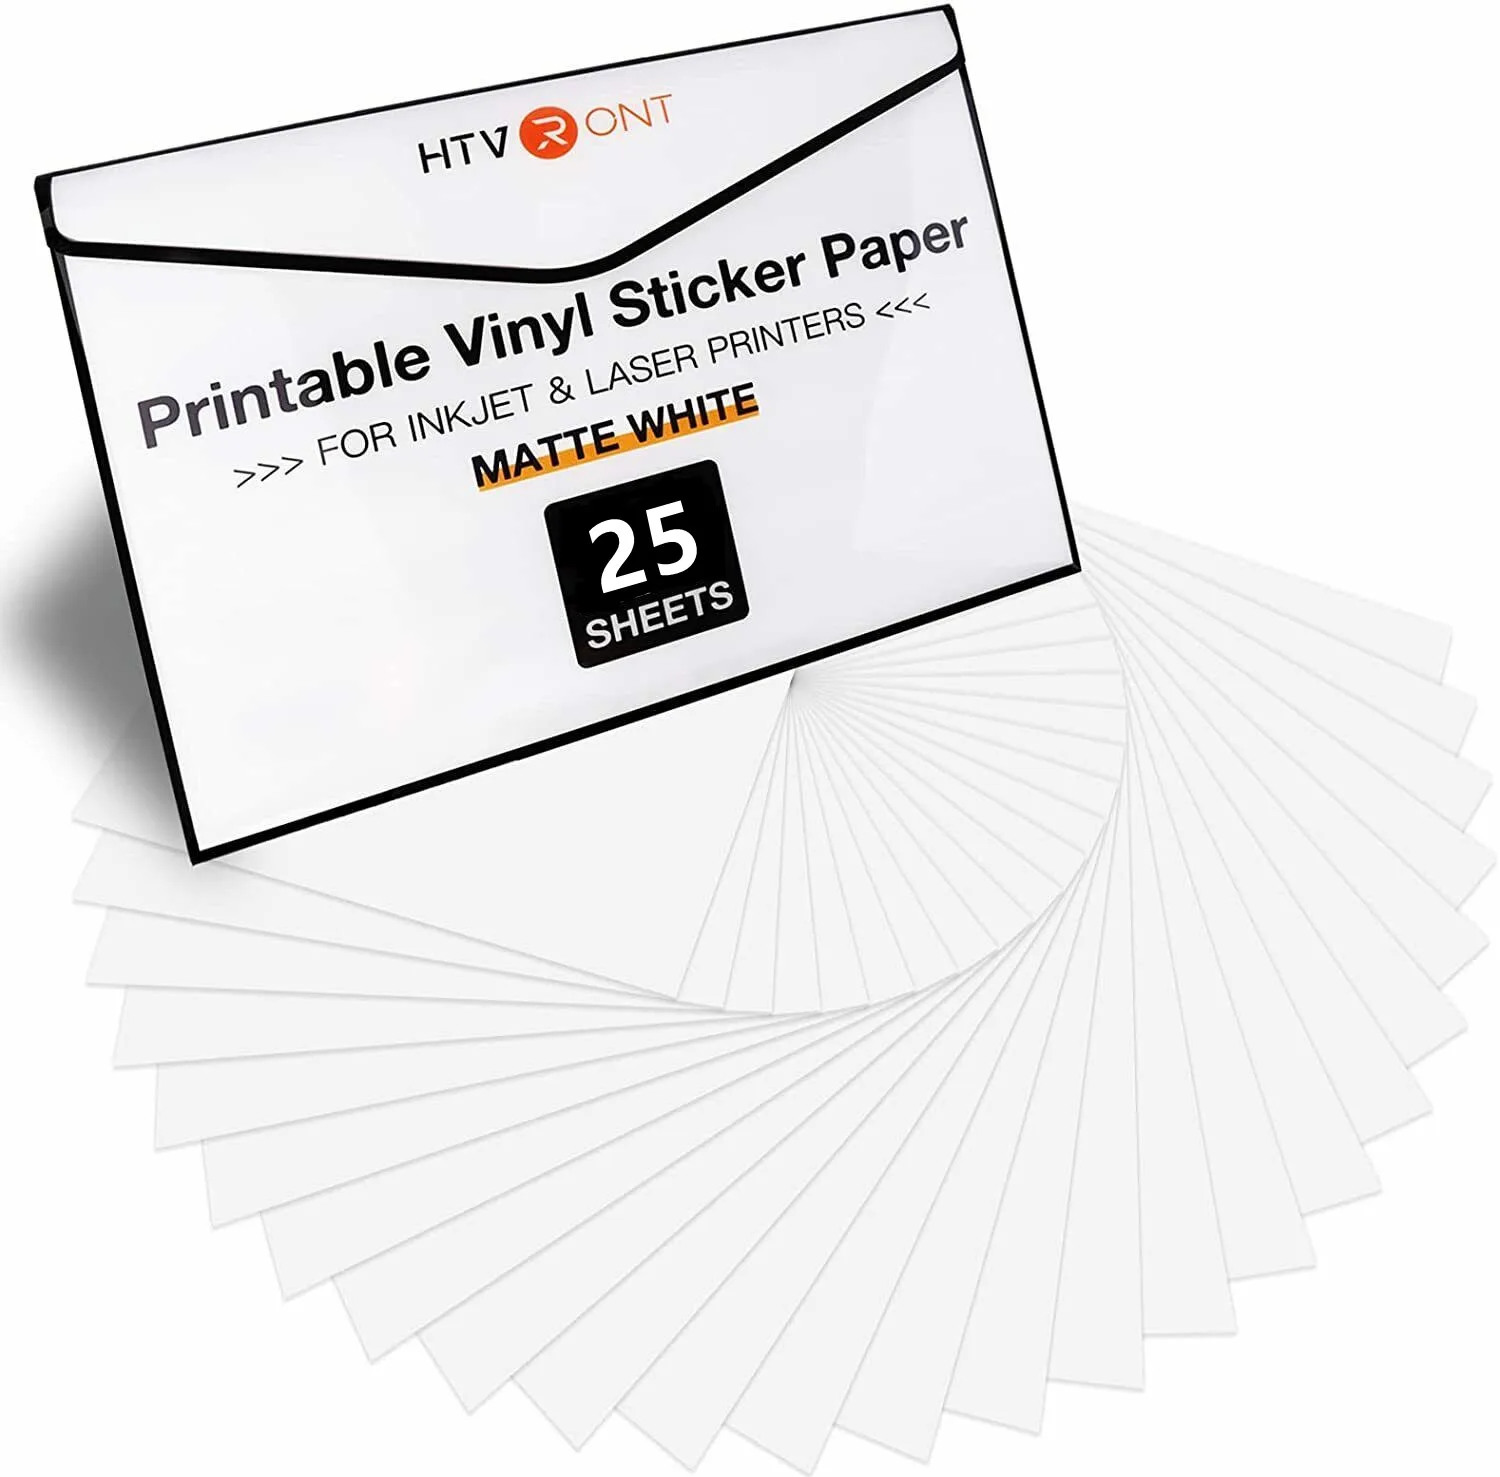 Sticker VINYL INKJET LASER A4 Printable Adhesive White Matt Waterproof Labels 